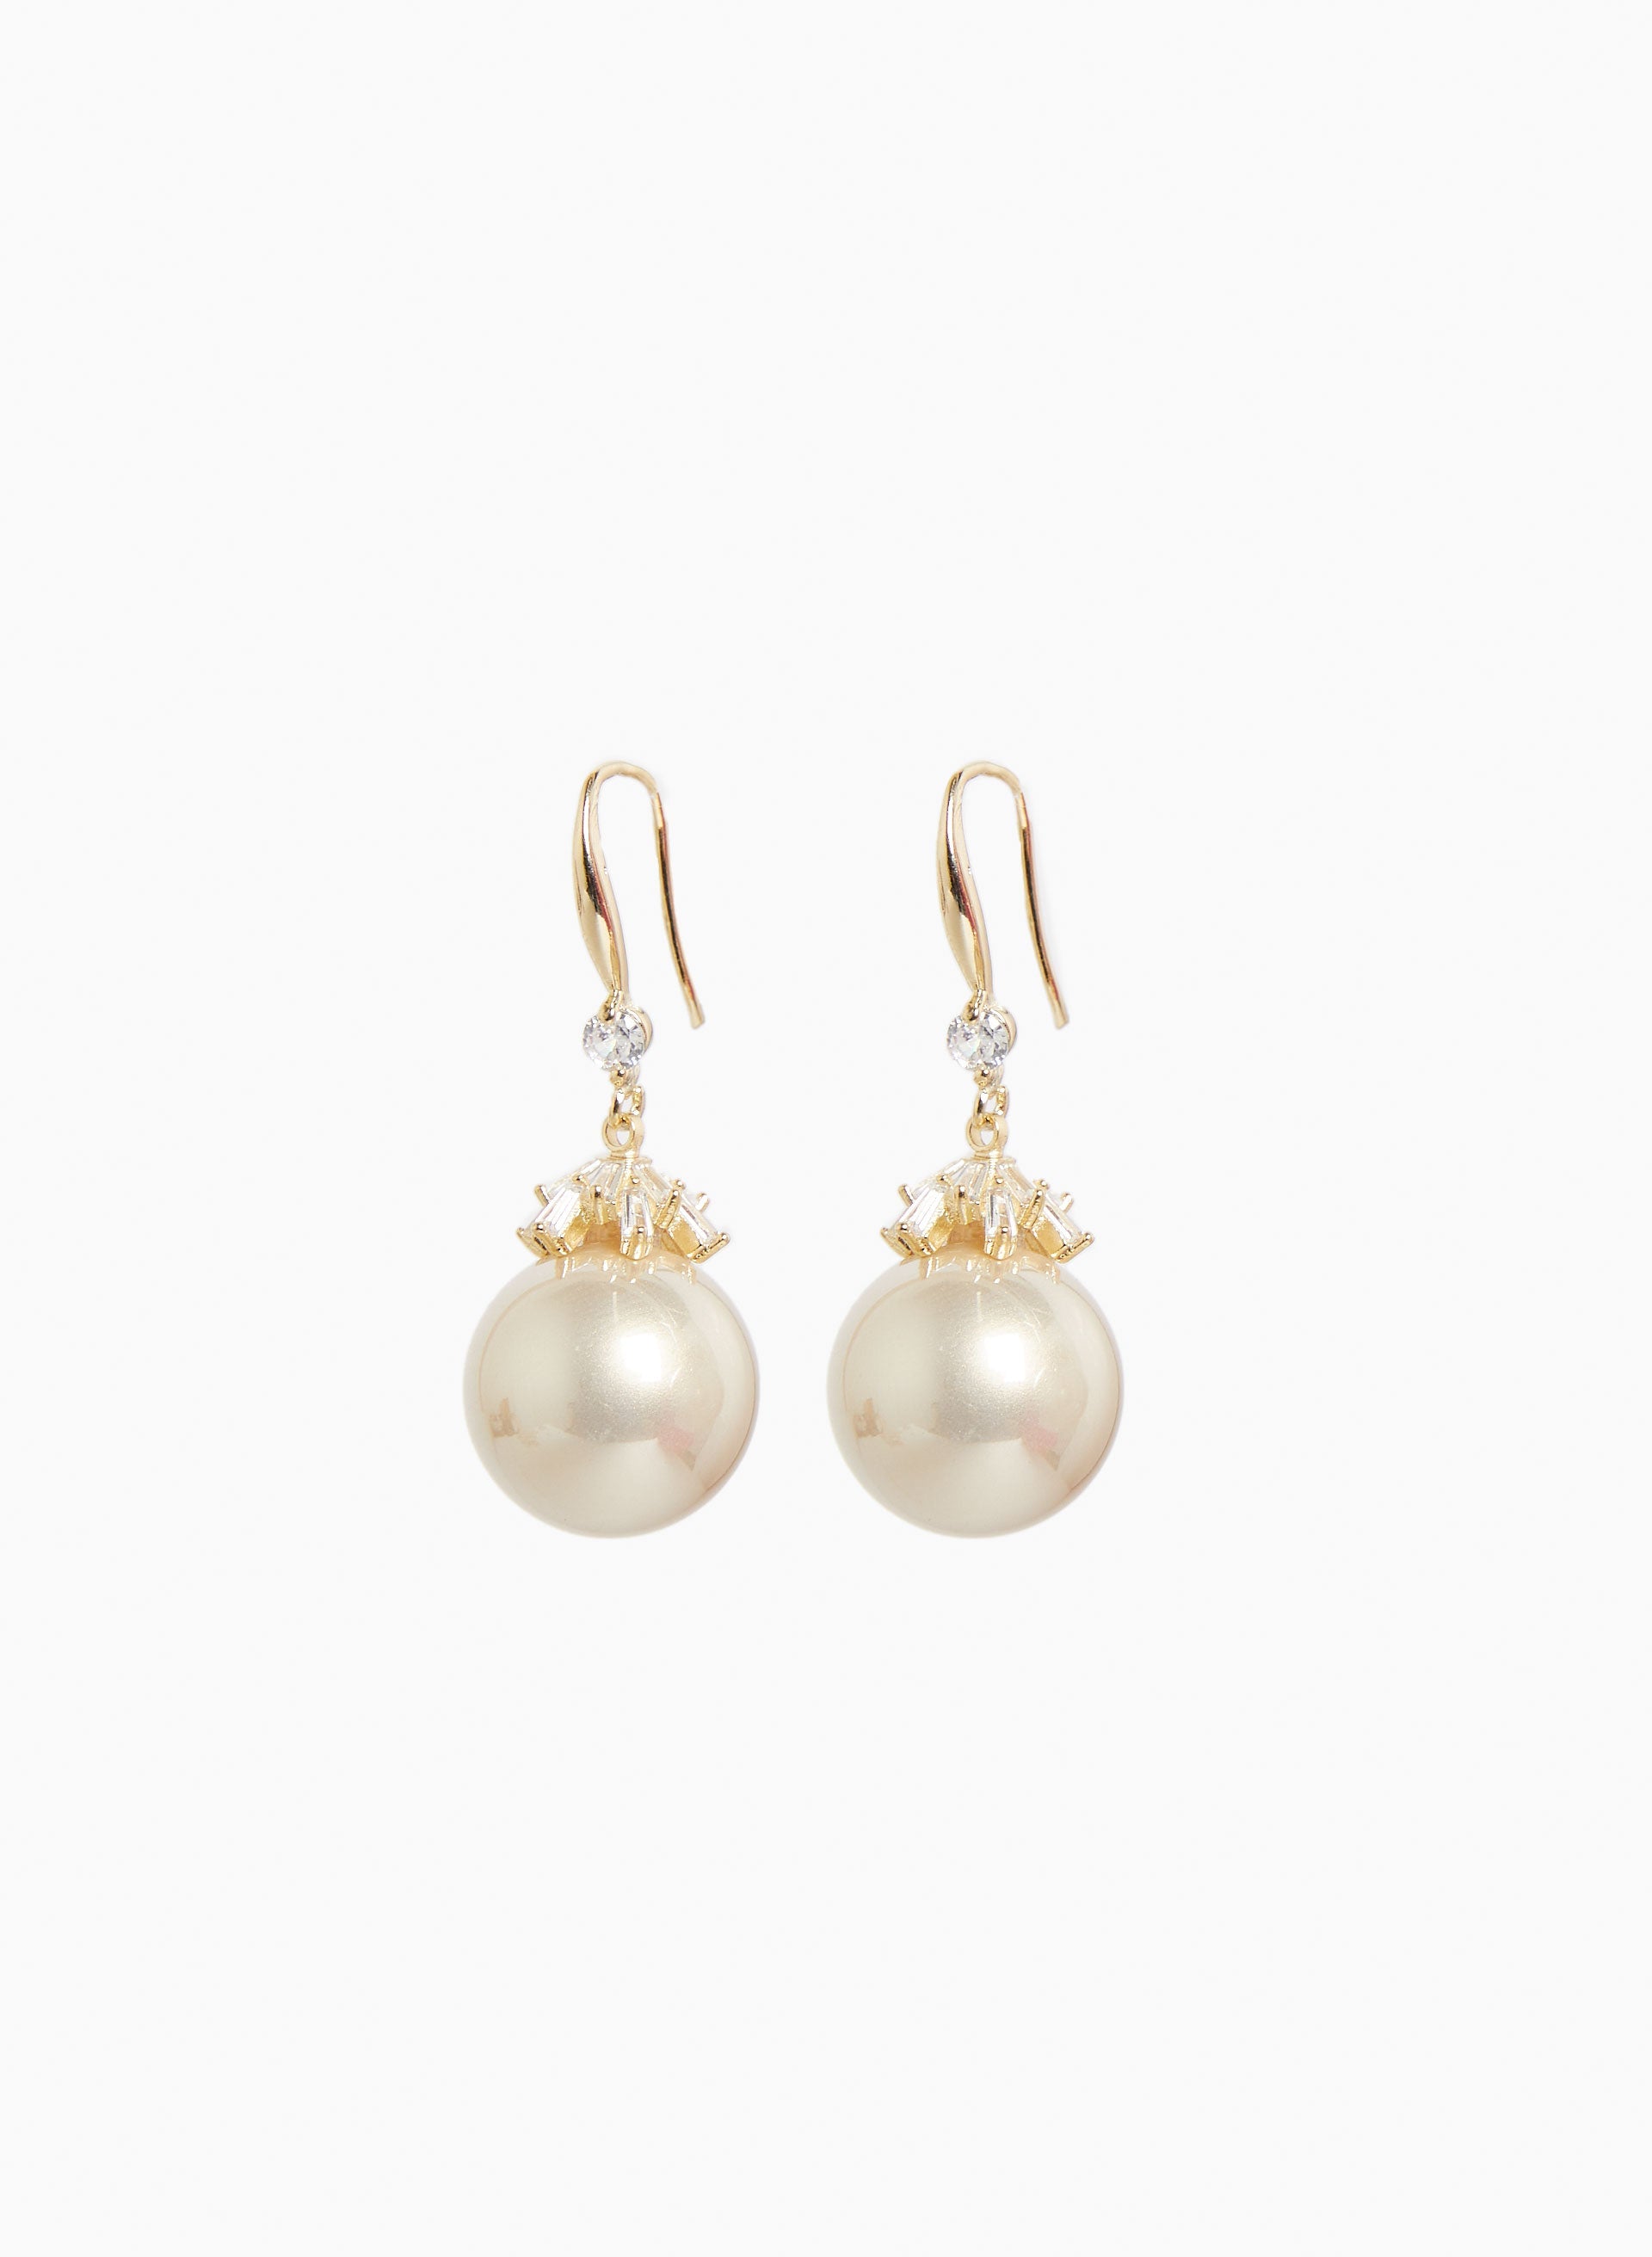 Pandora Elegant Beauty Drop Earrings with White Pearl & Clear CZ